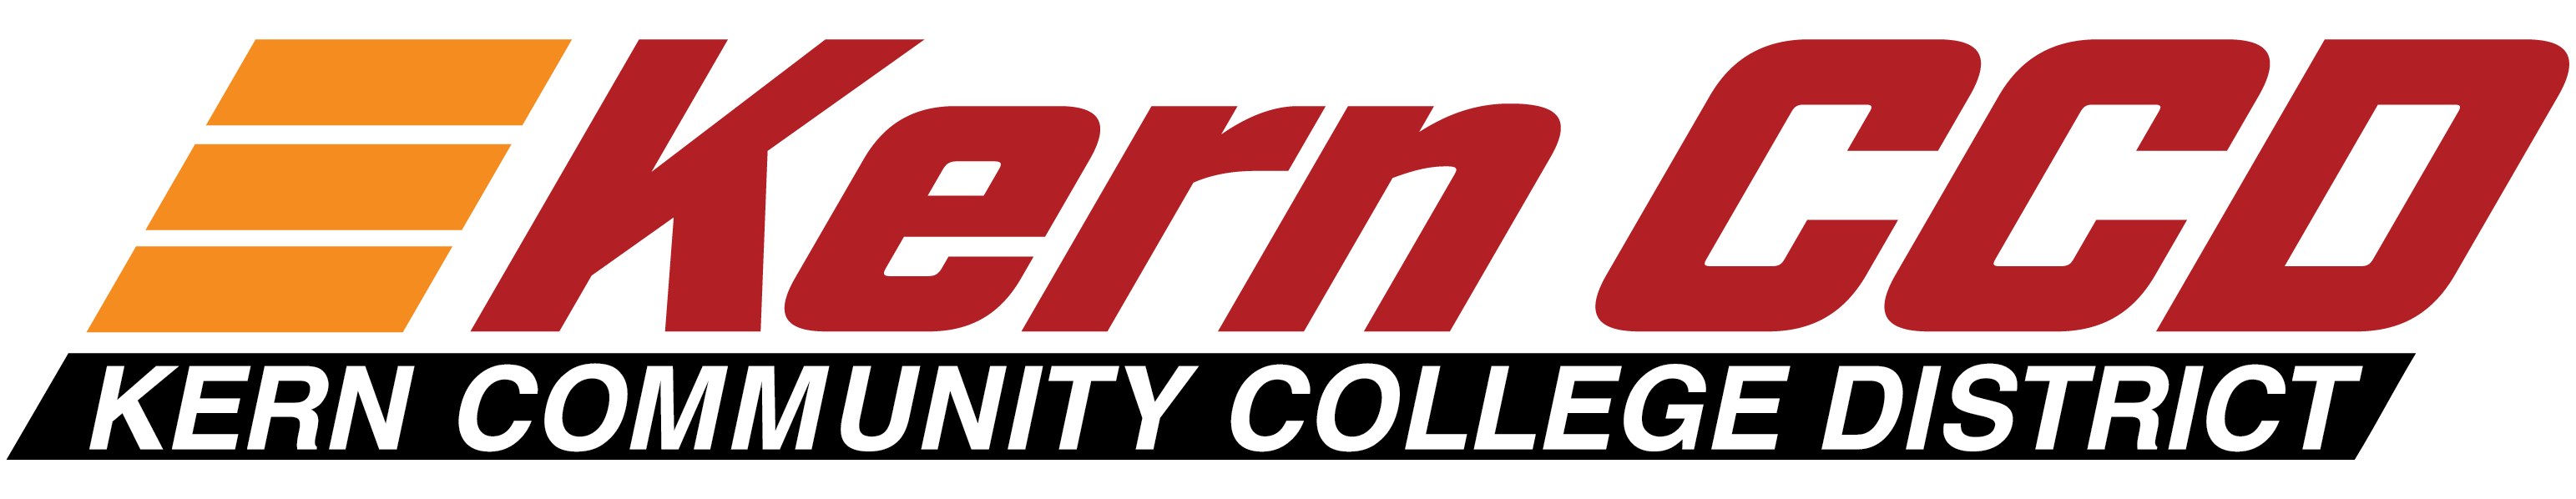 Kern Community College District Logo